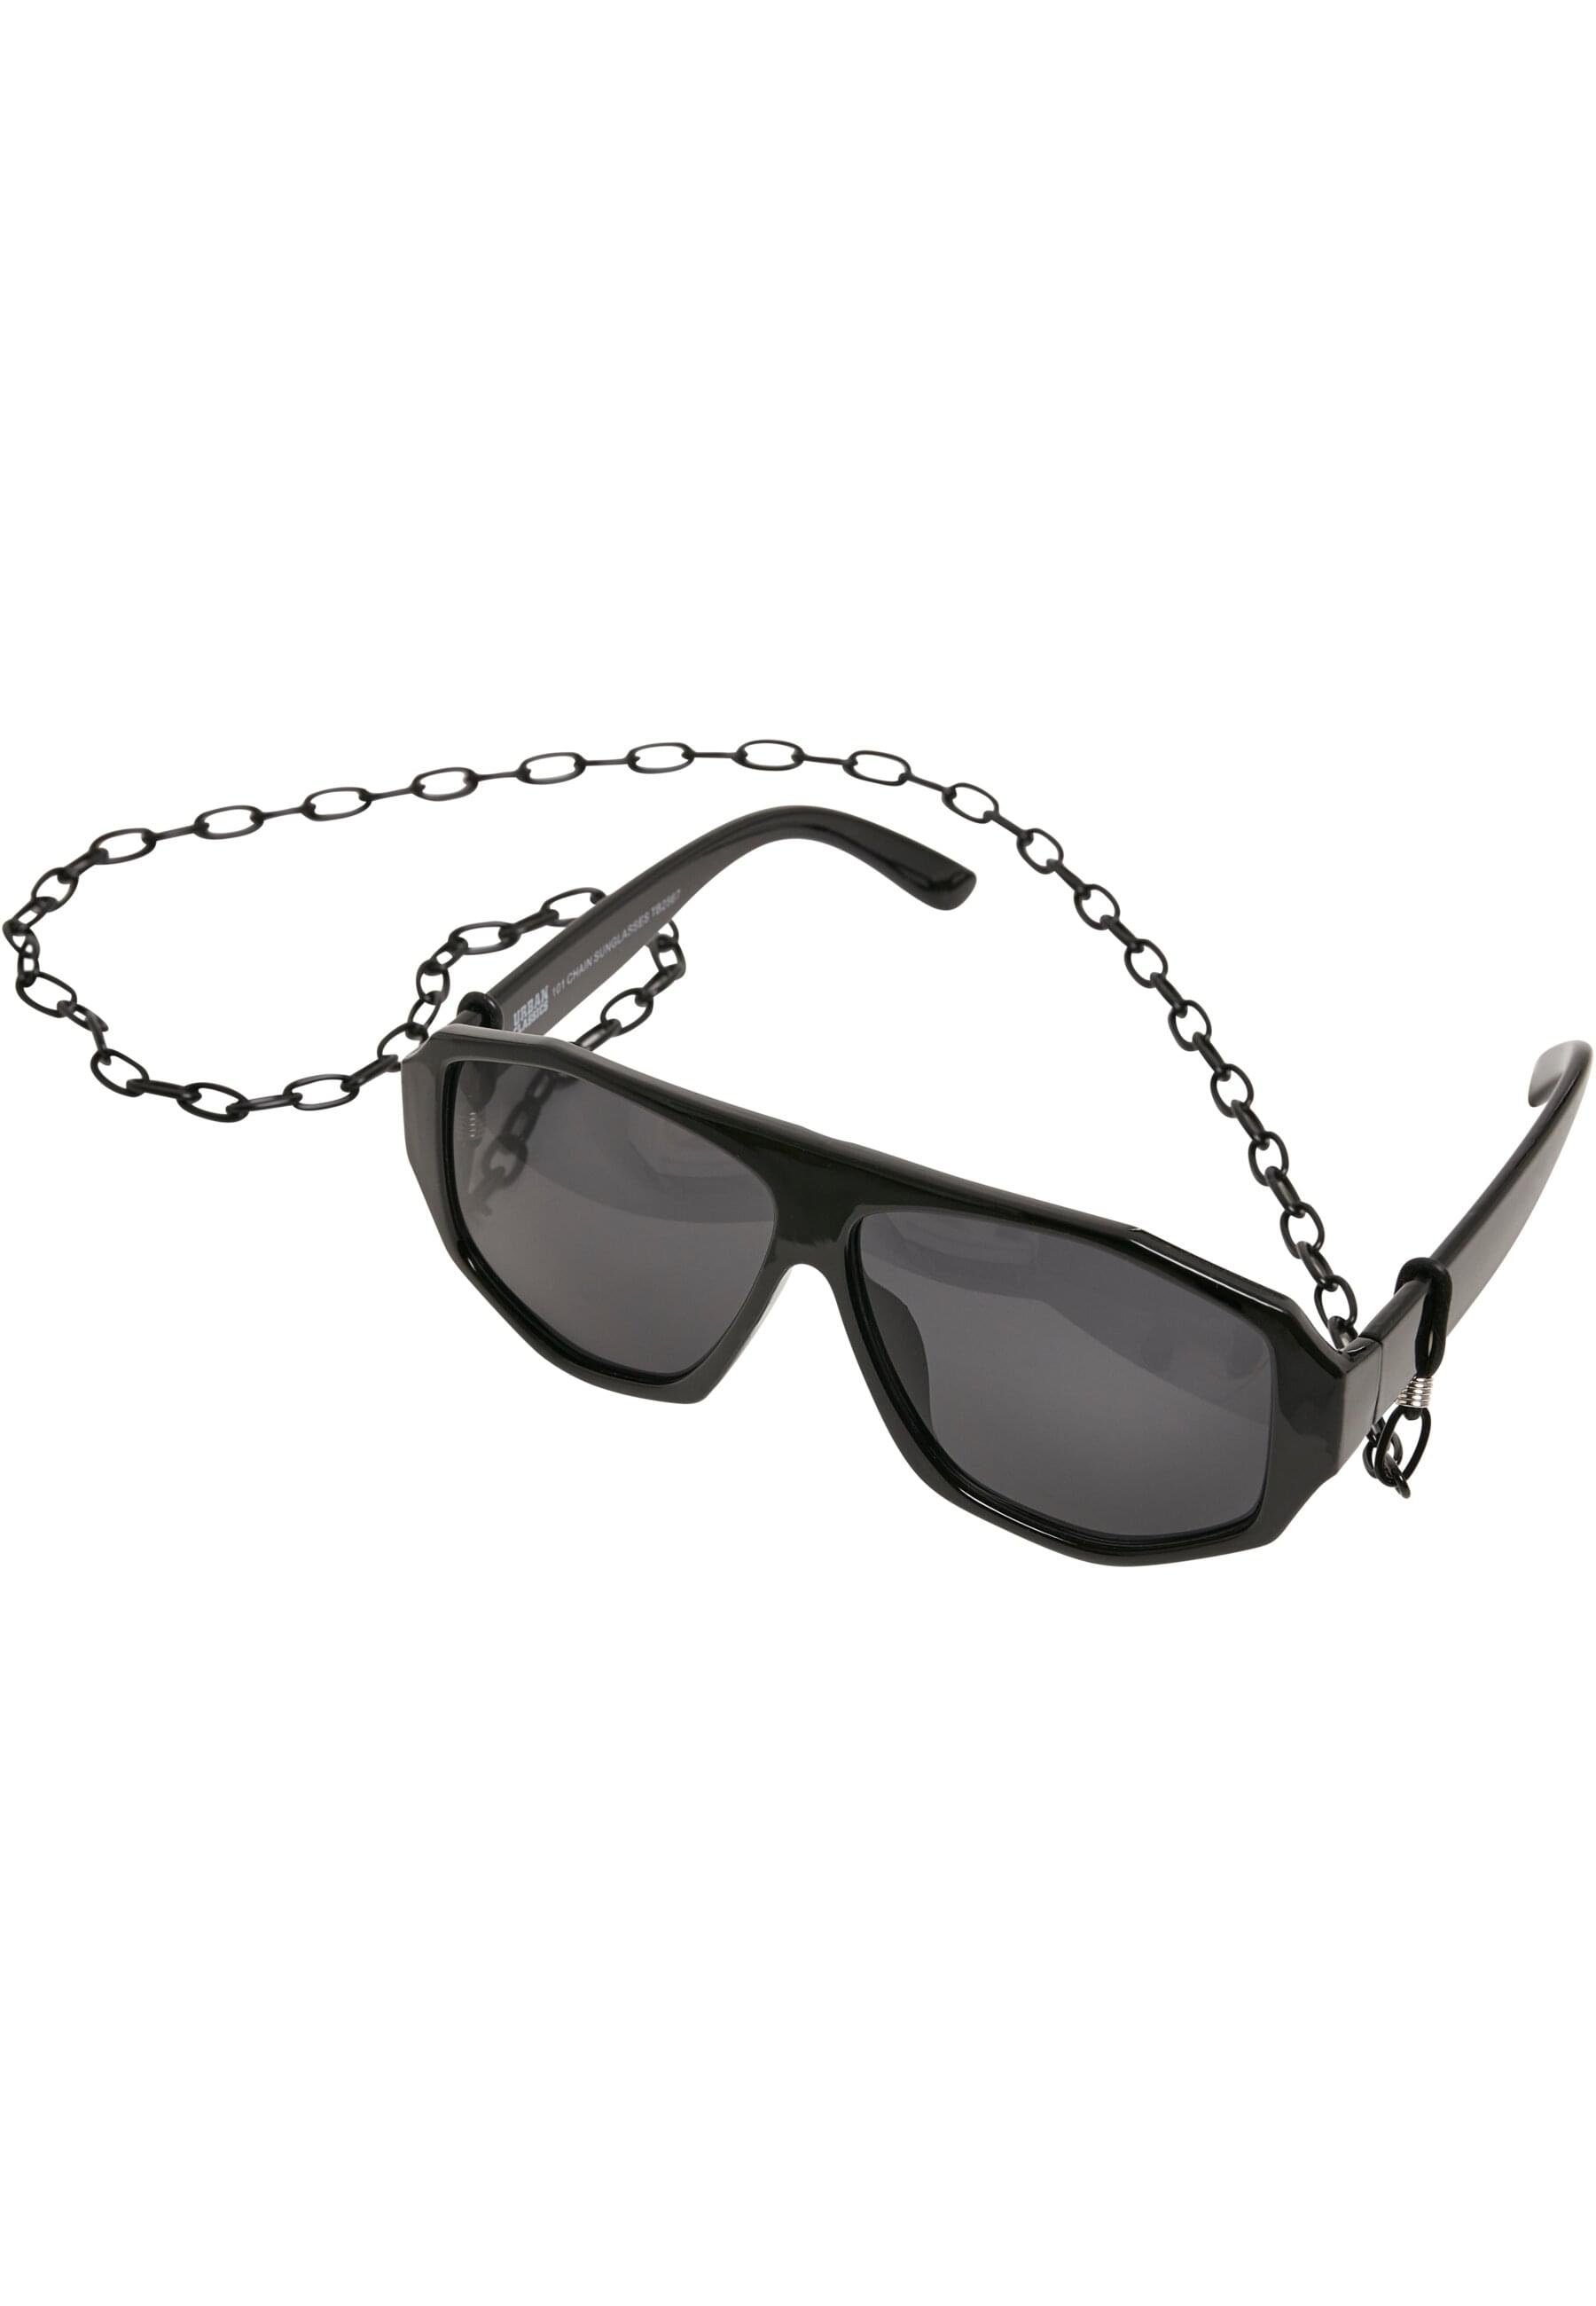 URBAN CLASSICS Sonnenbrille Unisex 101 TB2567 black/black Chain Sunglasses Chain 101